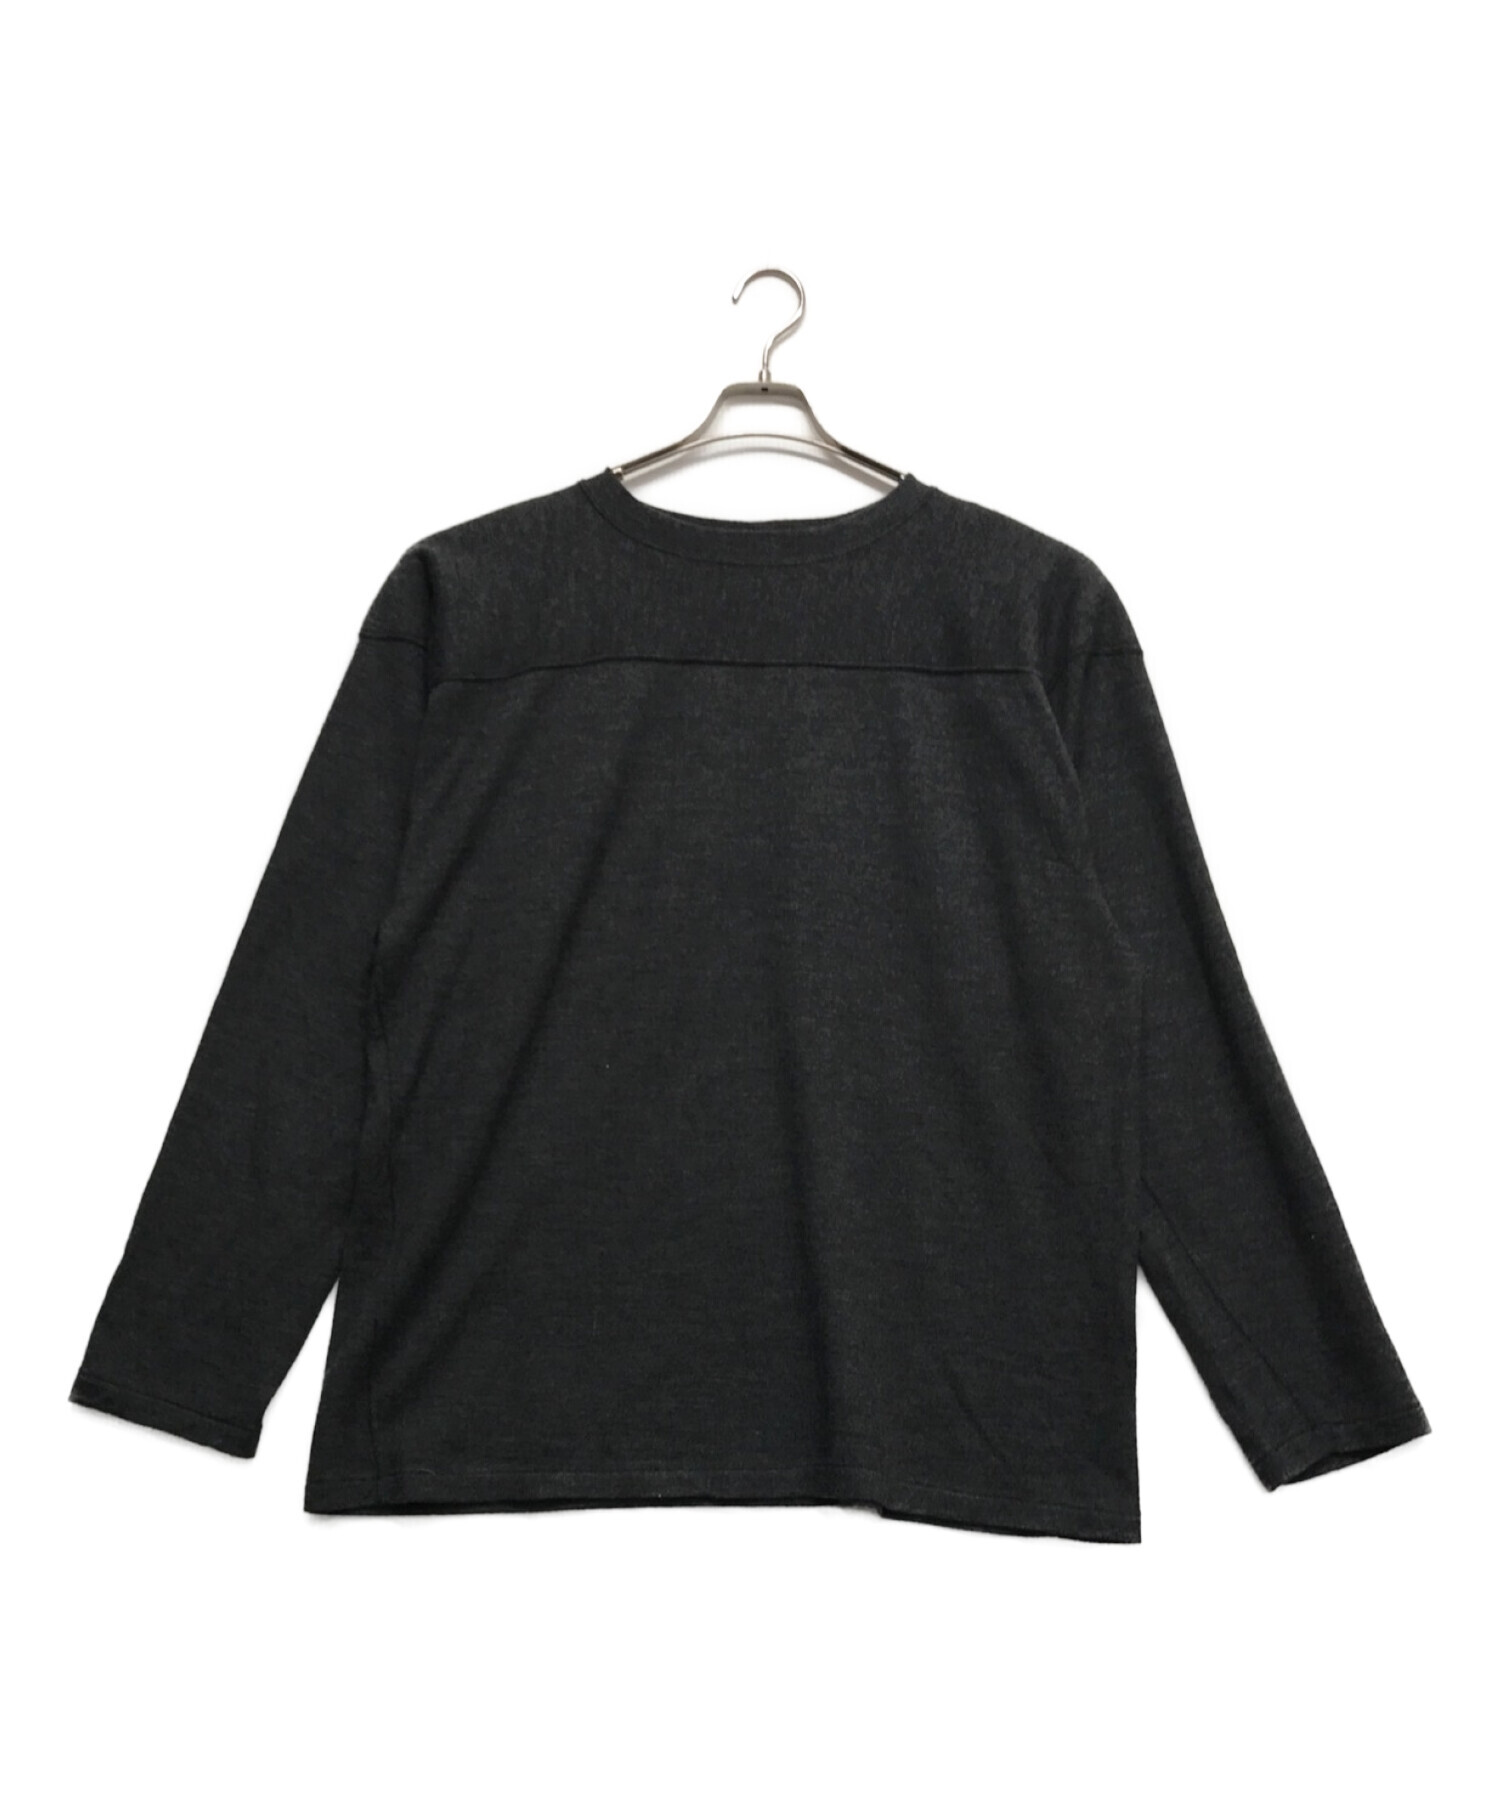 nanamica (ナナミカ) Merino Wool Football Shirt チャコールグレー サイズ:M